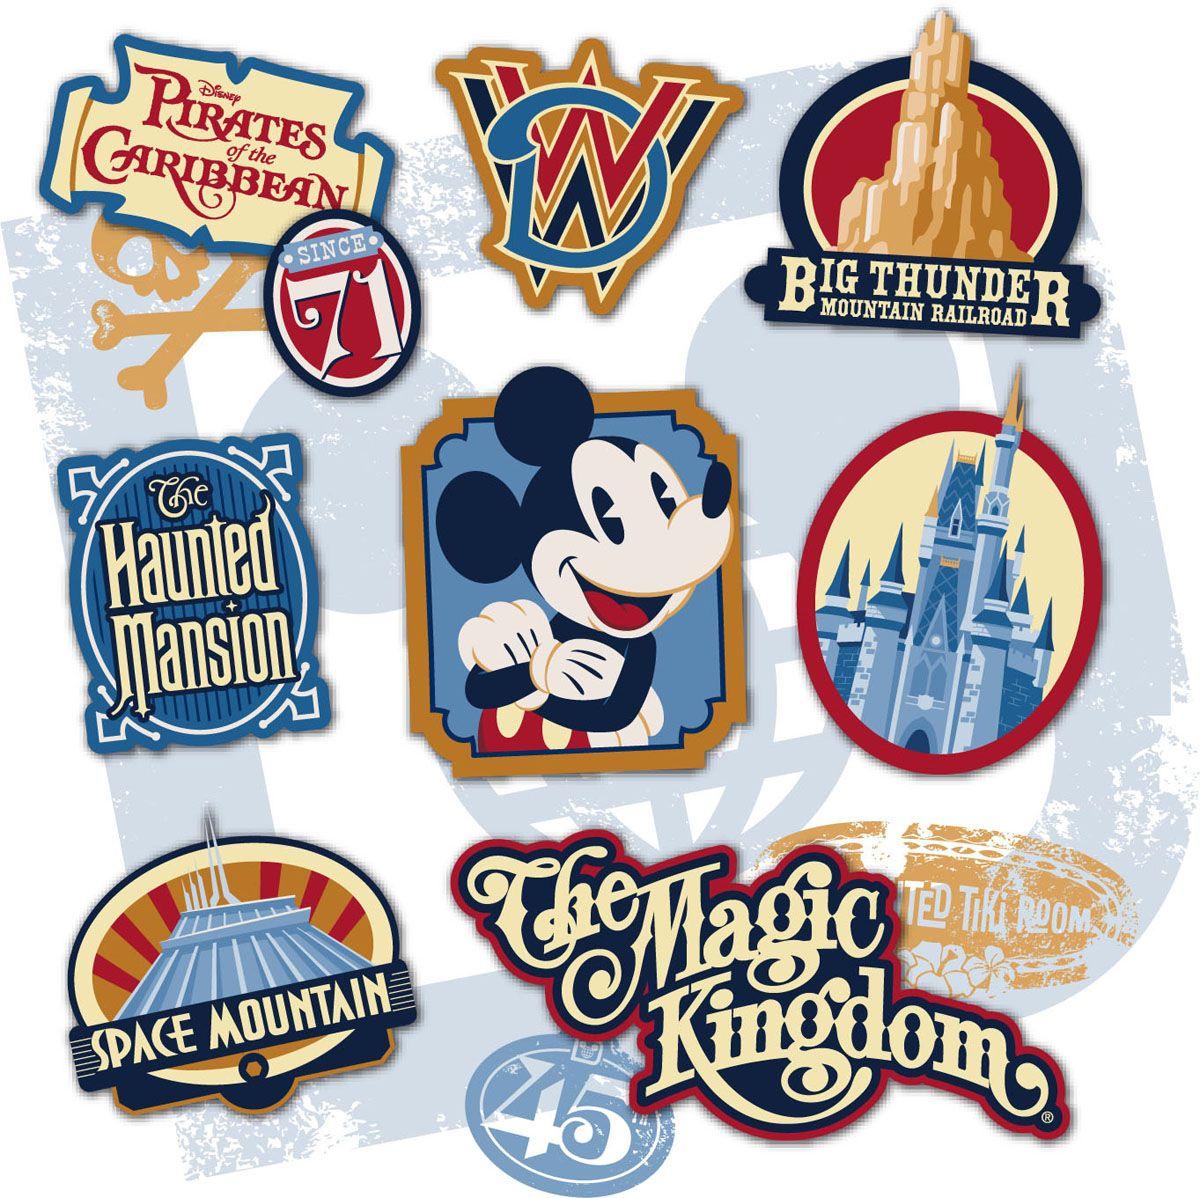 2018 Disney Parks Logo - First Look at Magic Kingdom 45th Anniversary Merchandise Artwork ...